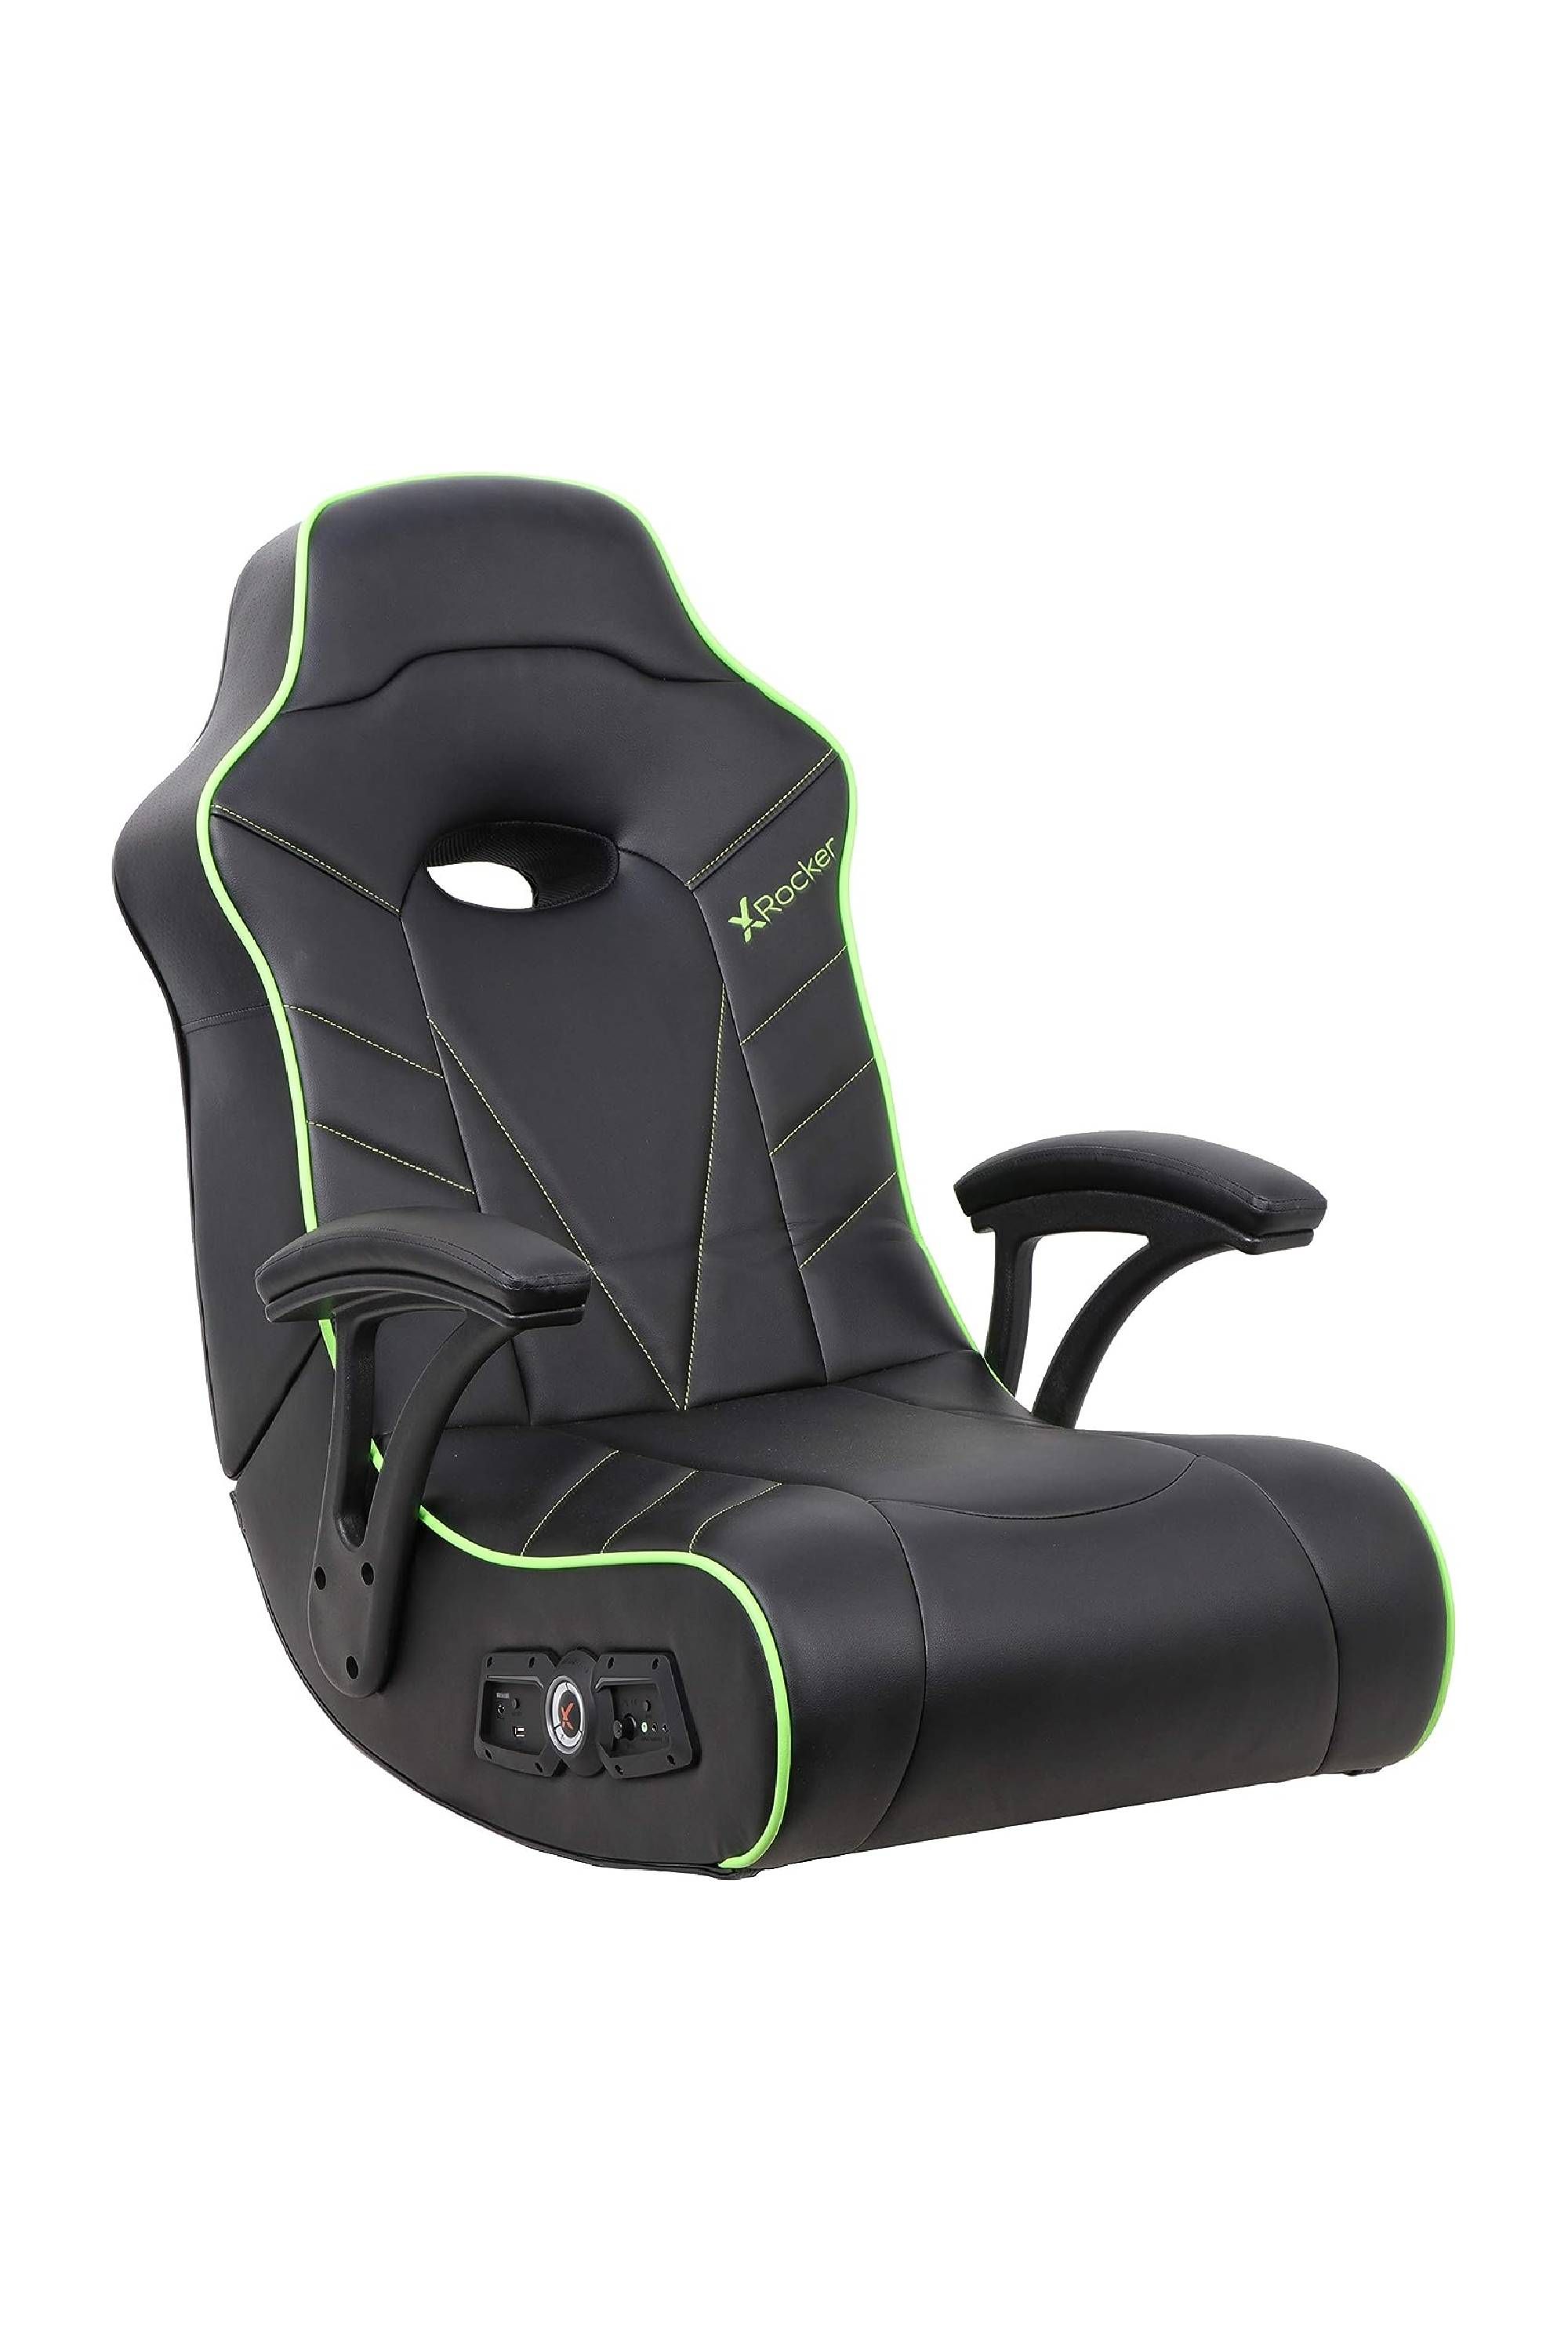 X Rocker Limewire Floor Gaming Chair